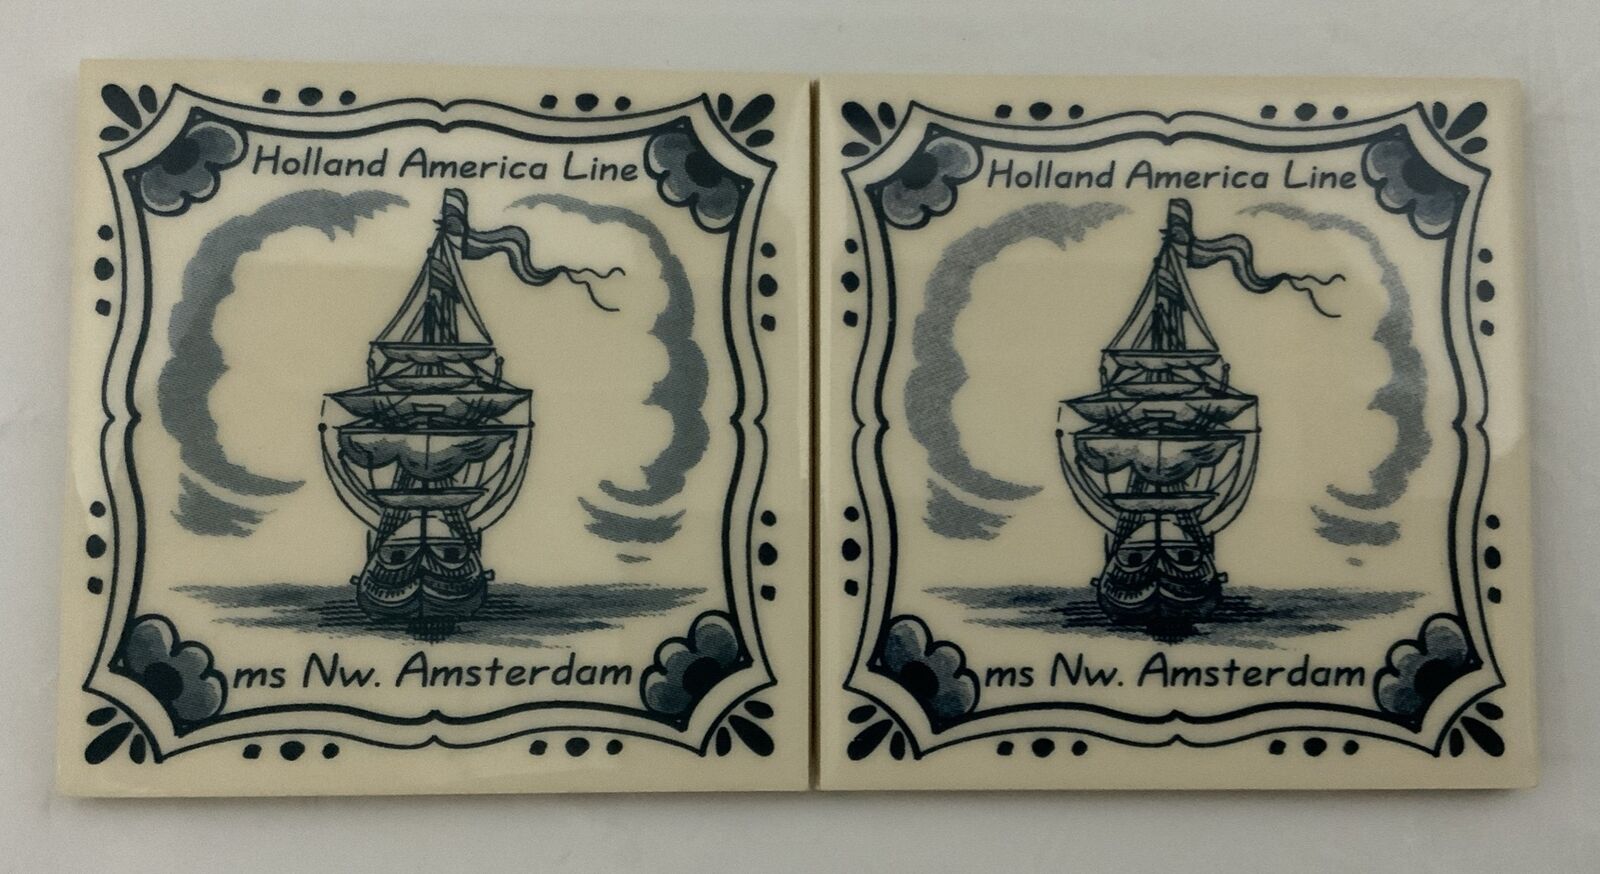 Vintage Delft Holland America Line “Ms Nw. Amsterdam” Ceramic Coaster Pair